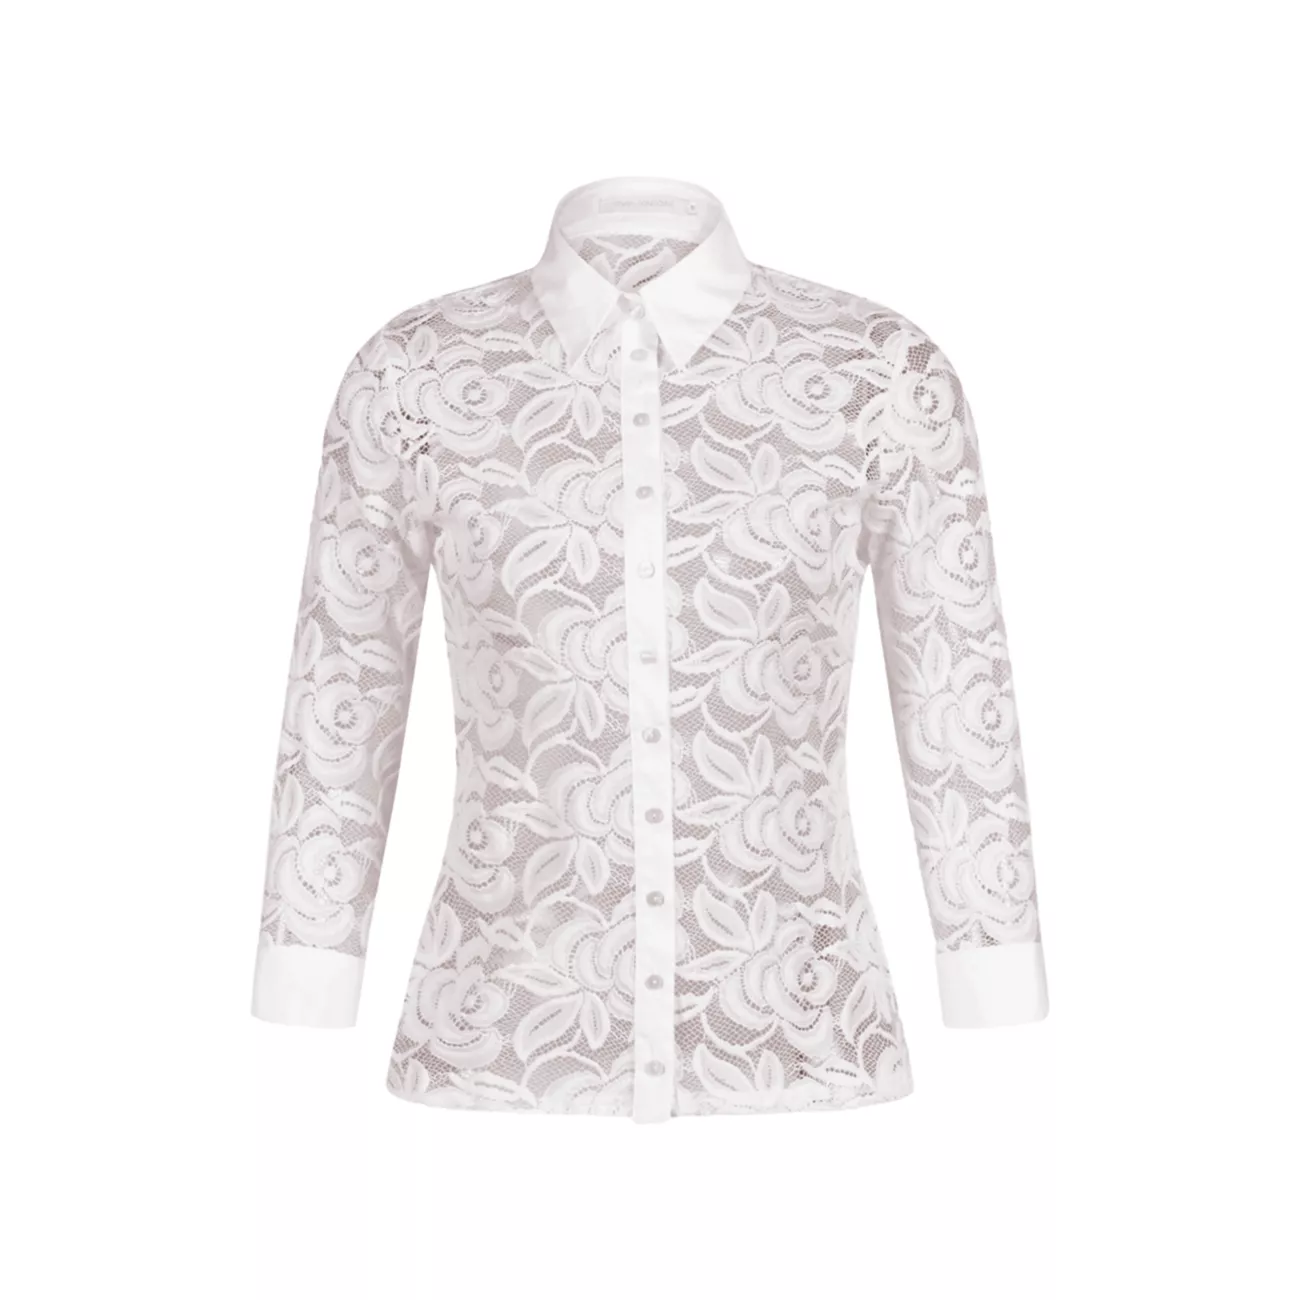 Кружевная блузка Vaerys с цветочным принтом Anne Fontaine